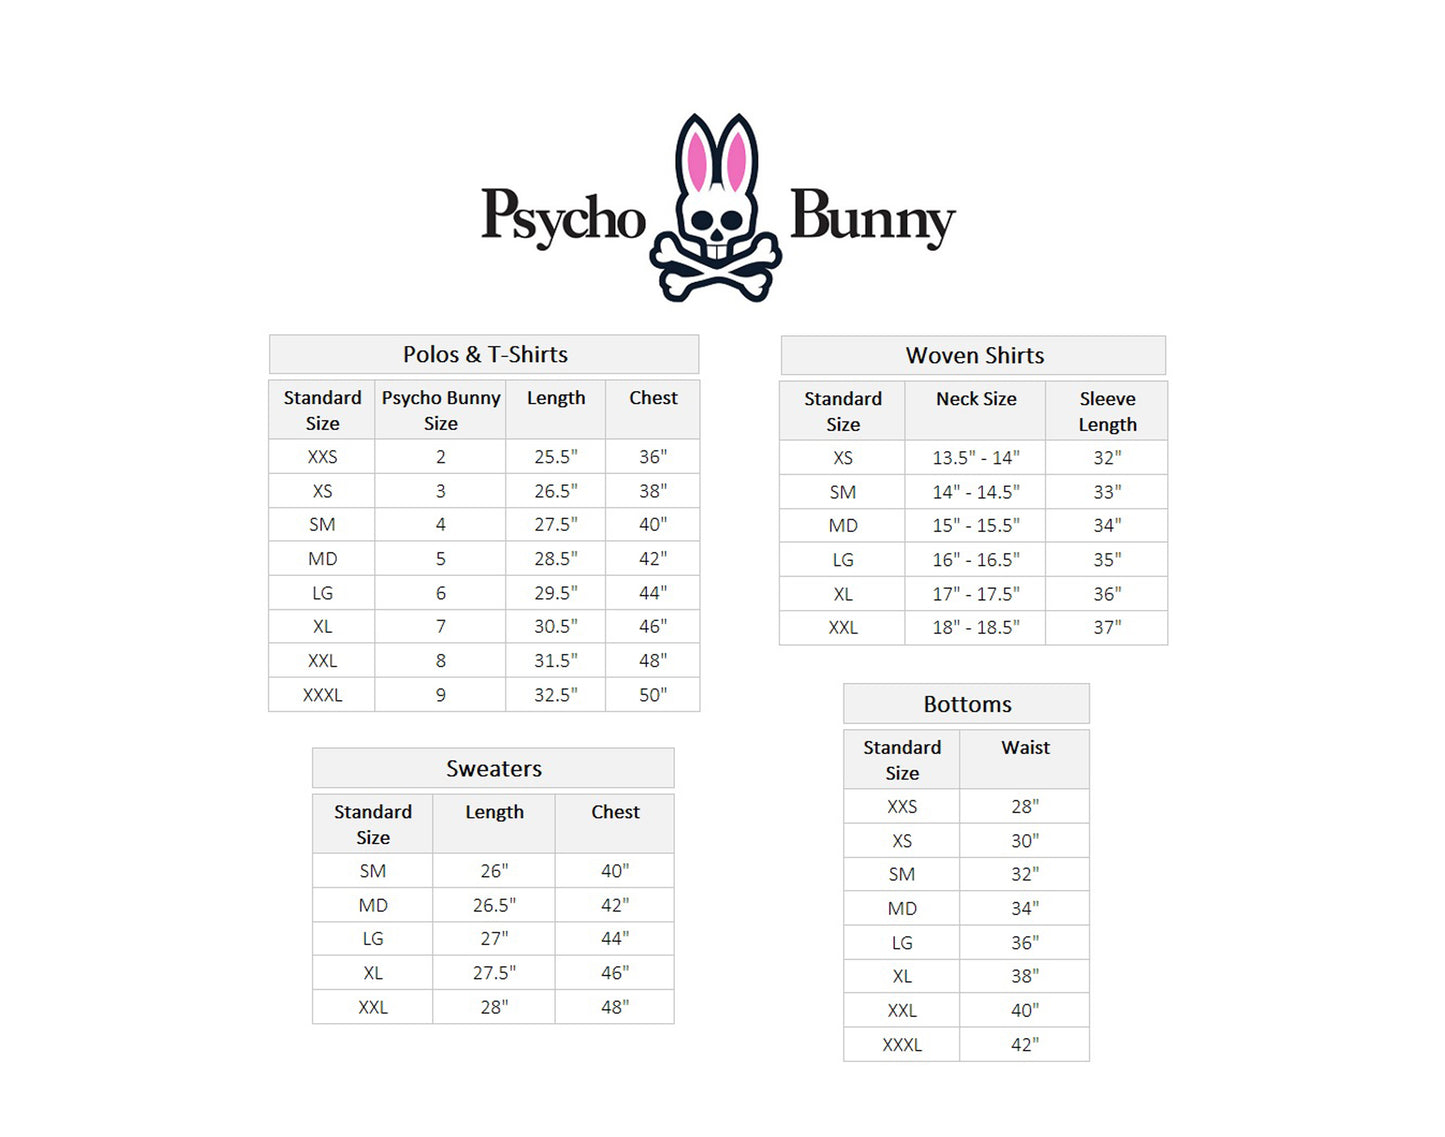 Psycho Bunny Classic Polo Heather Grey Men's Shirt B6K001ARPC-HGY